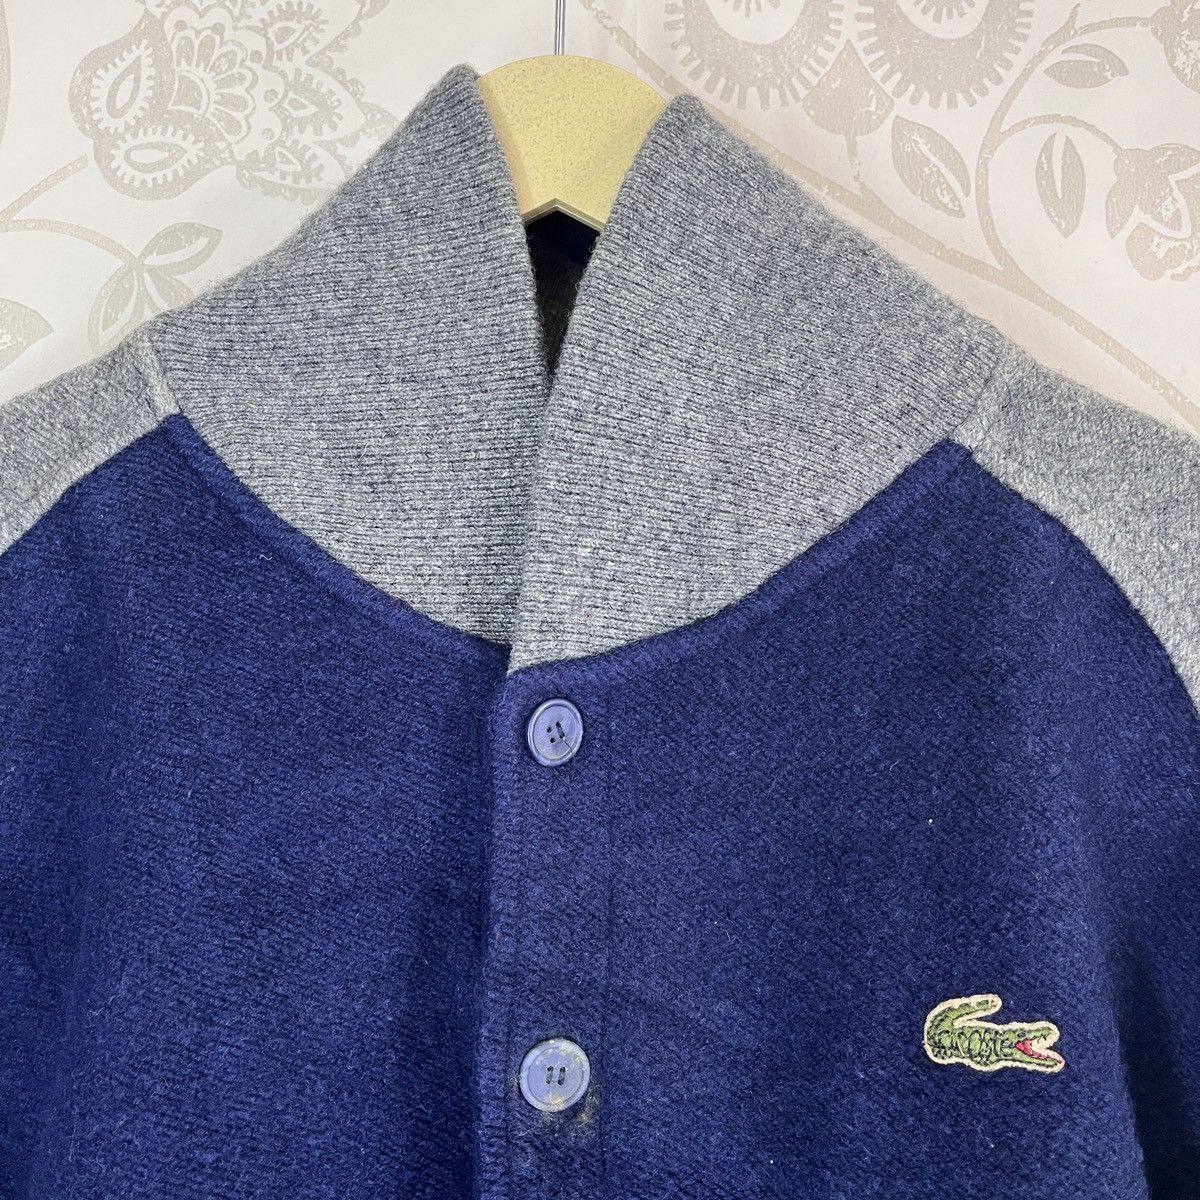 Bomber Style Jacket Lacoste Vintage 80s Sweater Japan - 5